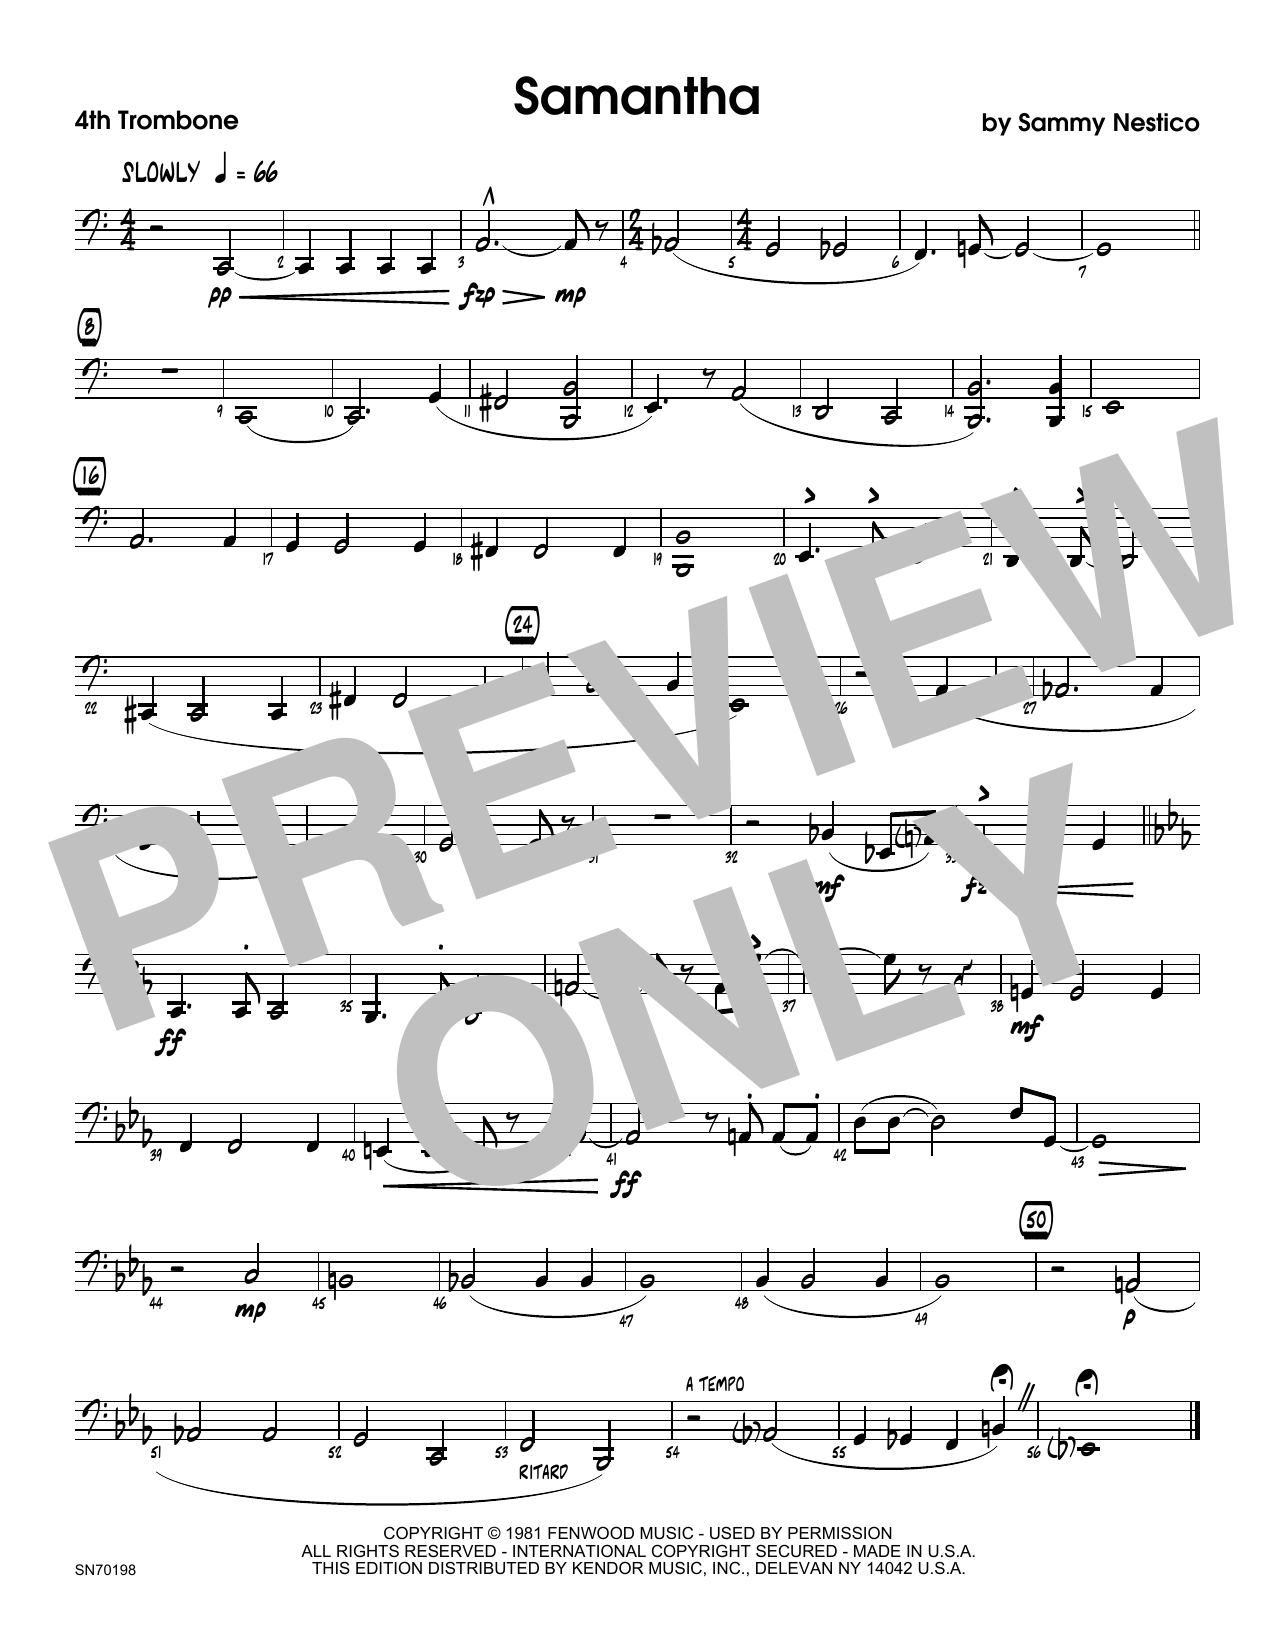 Download Sammy Nestico Samantha - 4th Trombone Sheet Music